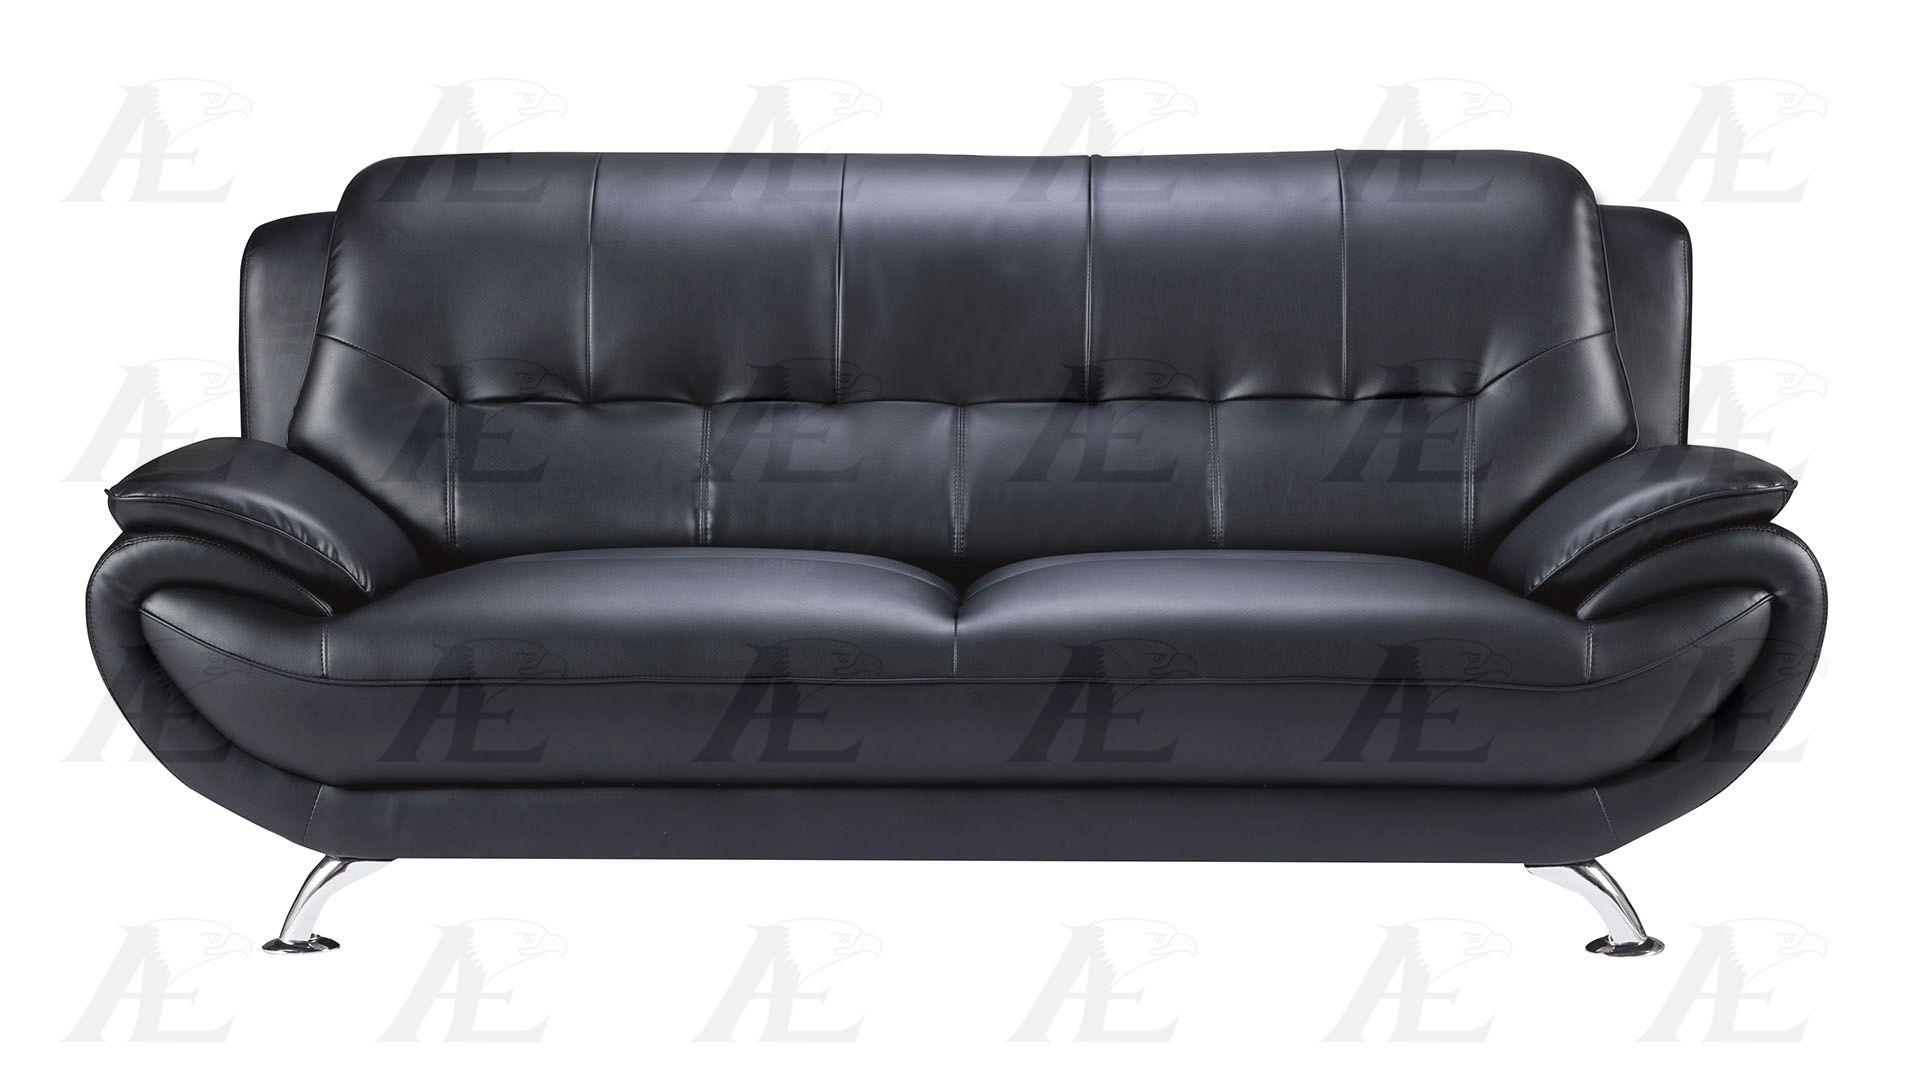 

    
American Eagle AE208-B Black Leather Sofa Set in Modern Style 3pcs
